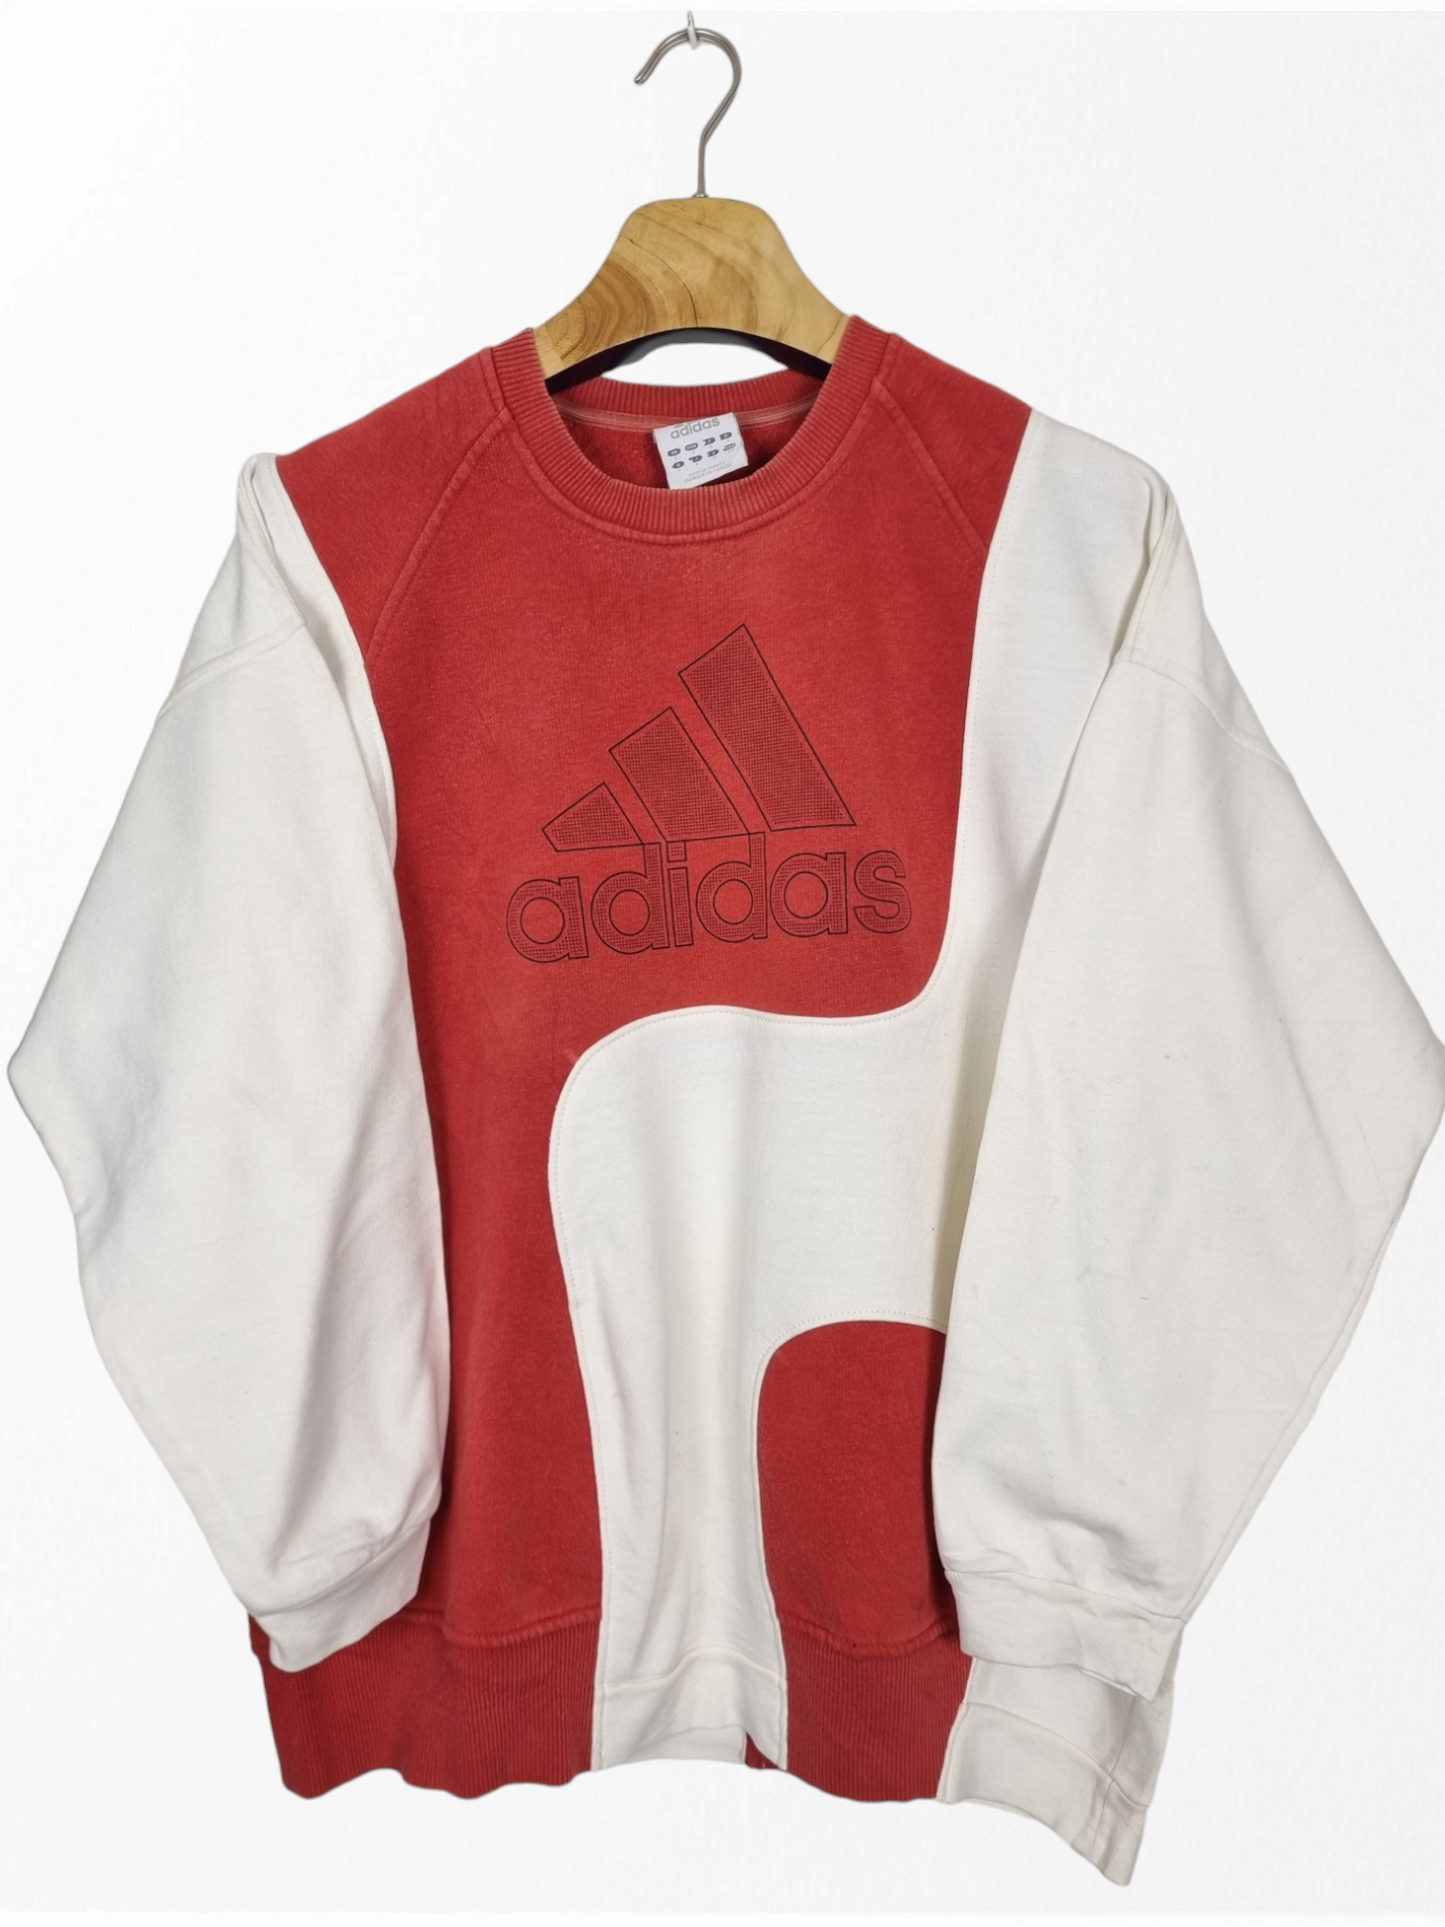 Adidas front logo sweater maat L